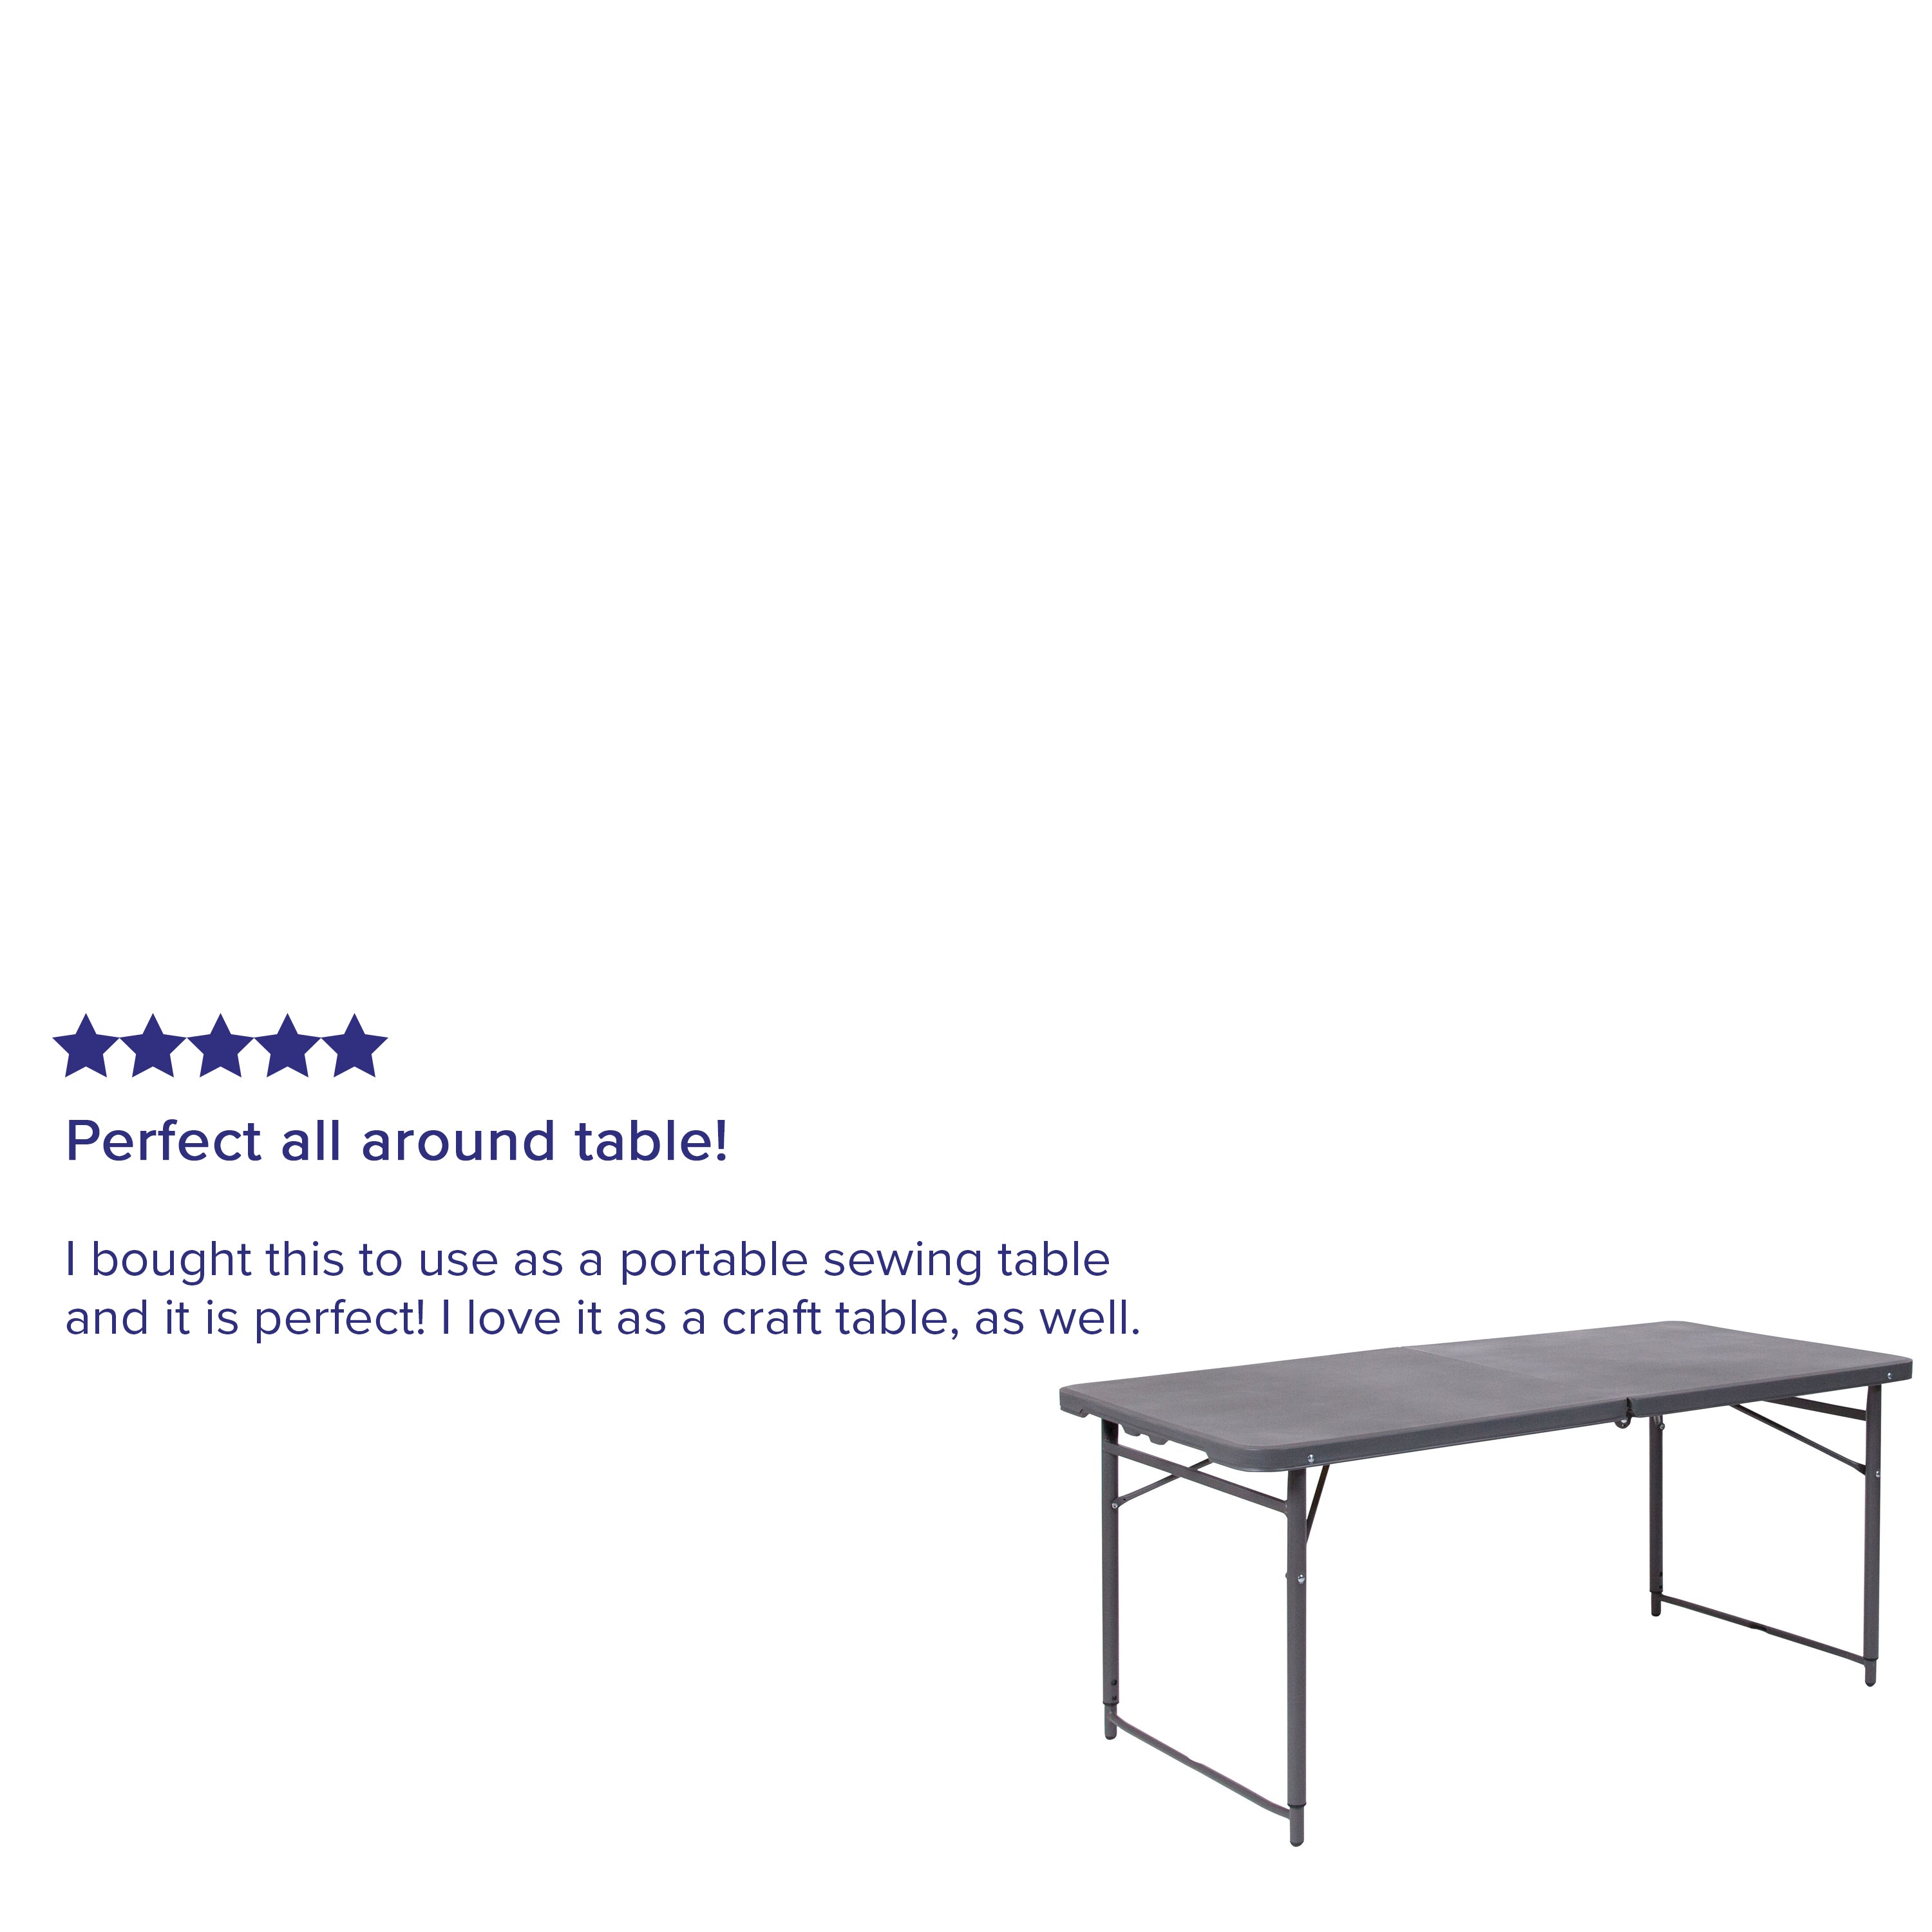 4-Foot Height Adjustable Bi-Fold Dark Gray Plastic Folding Table with Carrying Handle-Rectangular Plastic Folding Table-Flash Furniture-Wall2Wall Furnishings